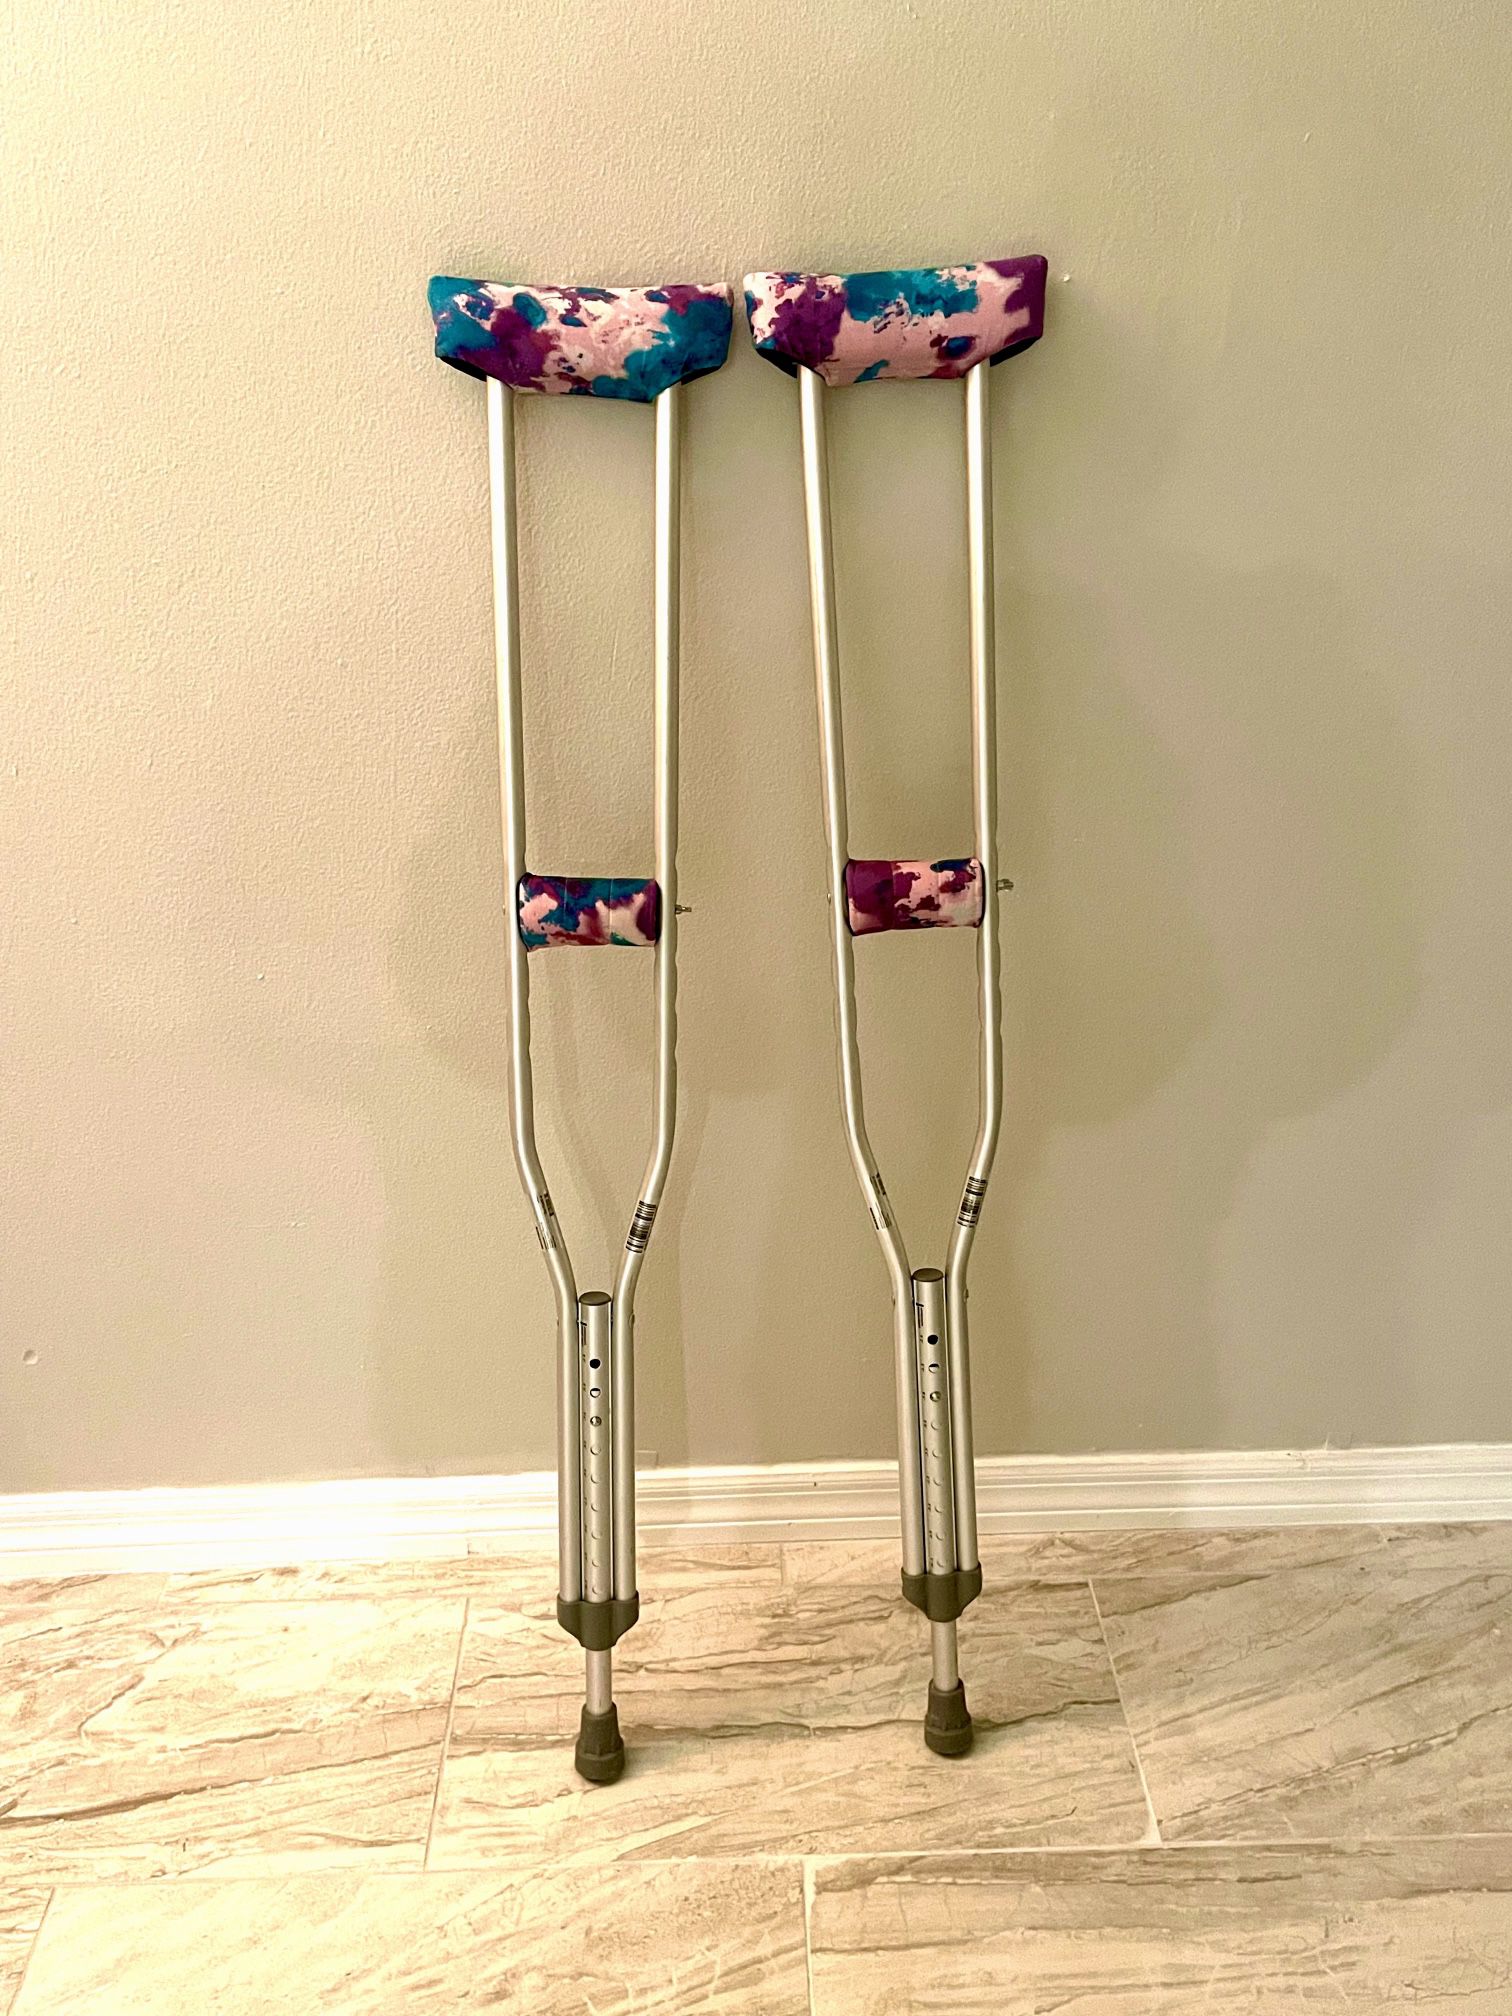 Slightly Used Crutches With Tye Dye Covers 